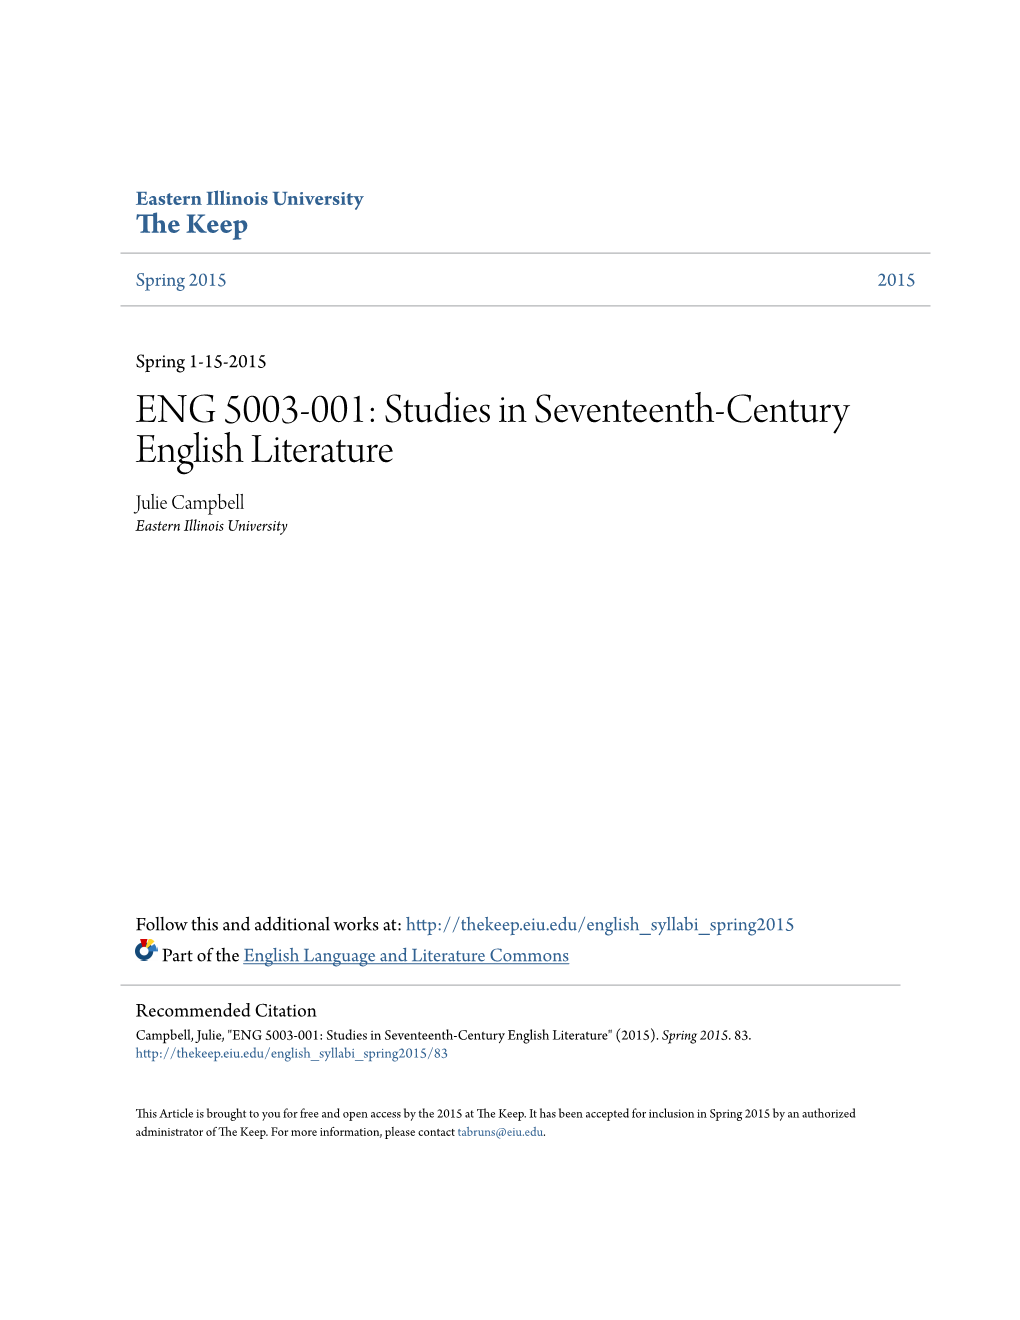 ENG 5003-001: Studies in Seventeenth-Century English Literature Julie Campbell Eastern Illinois University